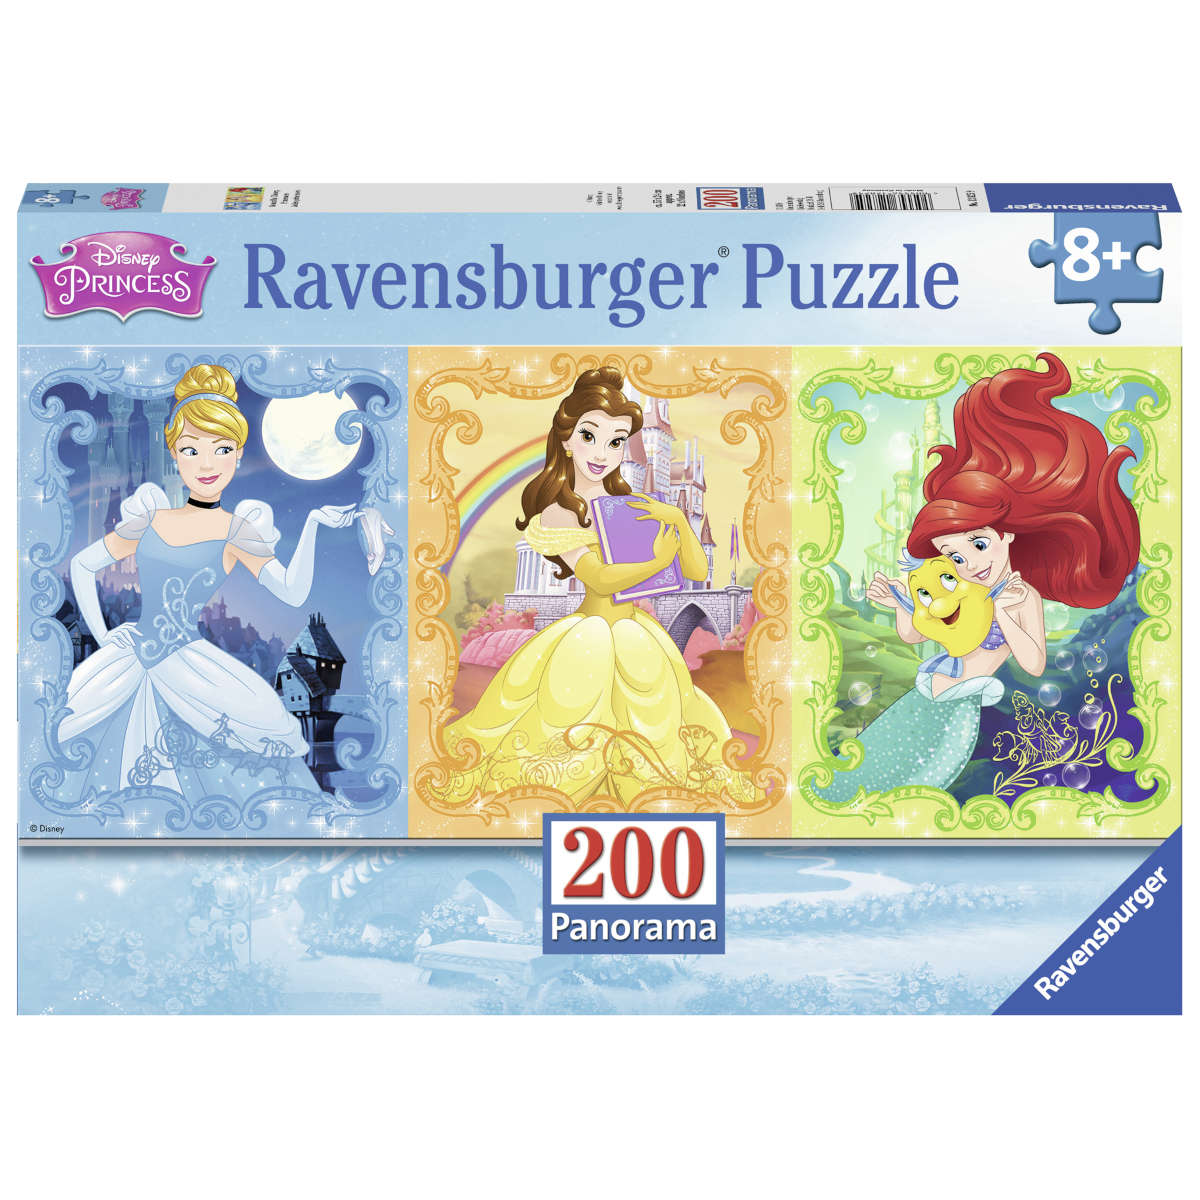 Ravensburger Disney Princess 200 pc panorama